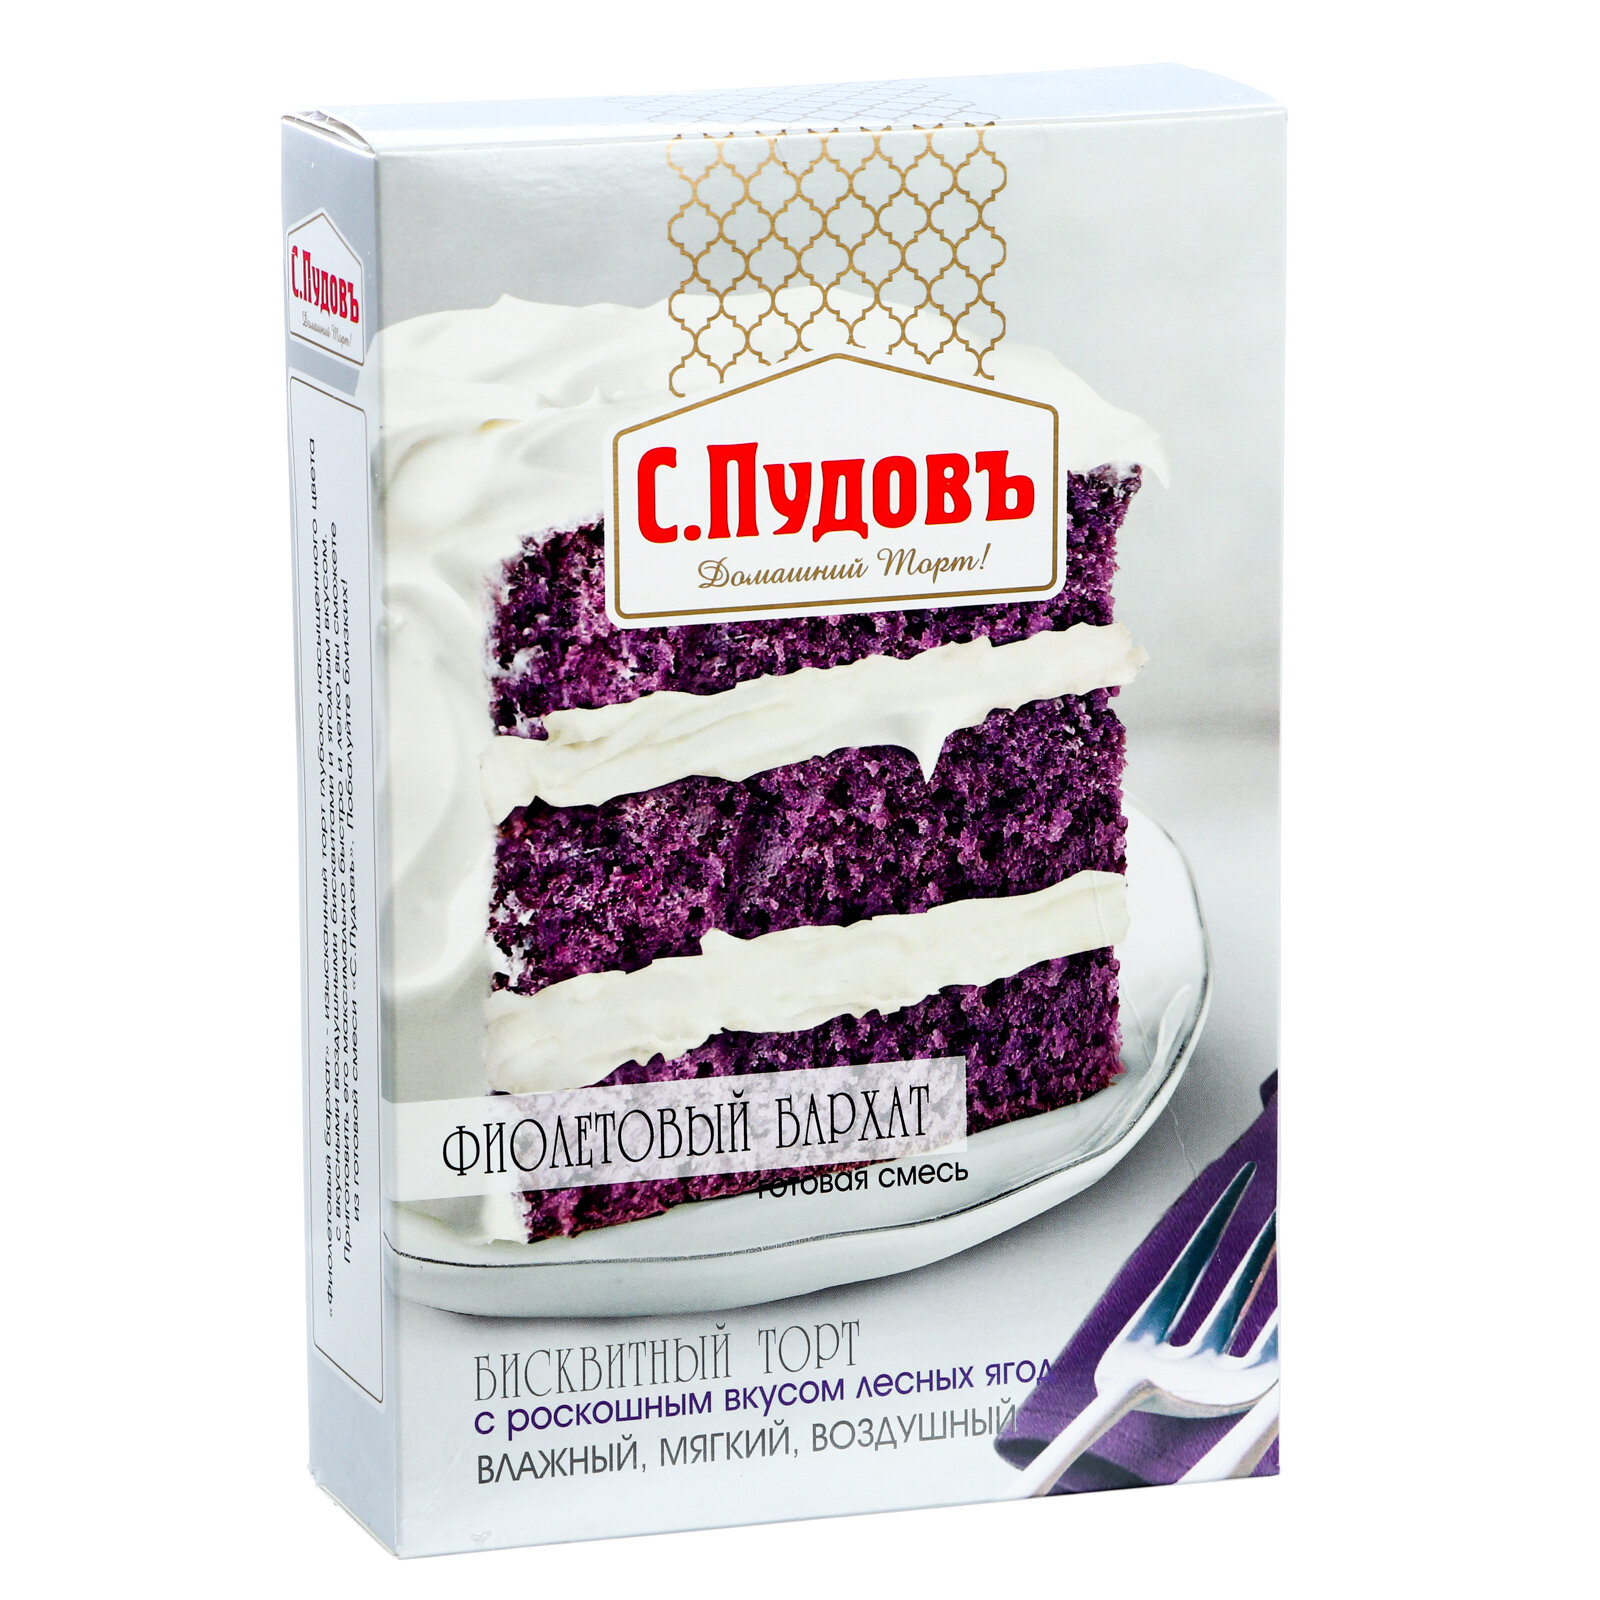 Торт "Фиолетовый бархат" С. Пудовъ, 400 г